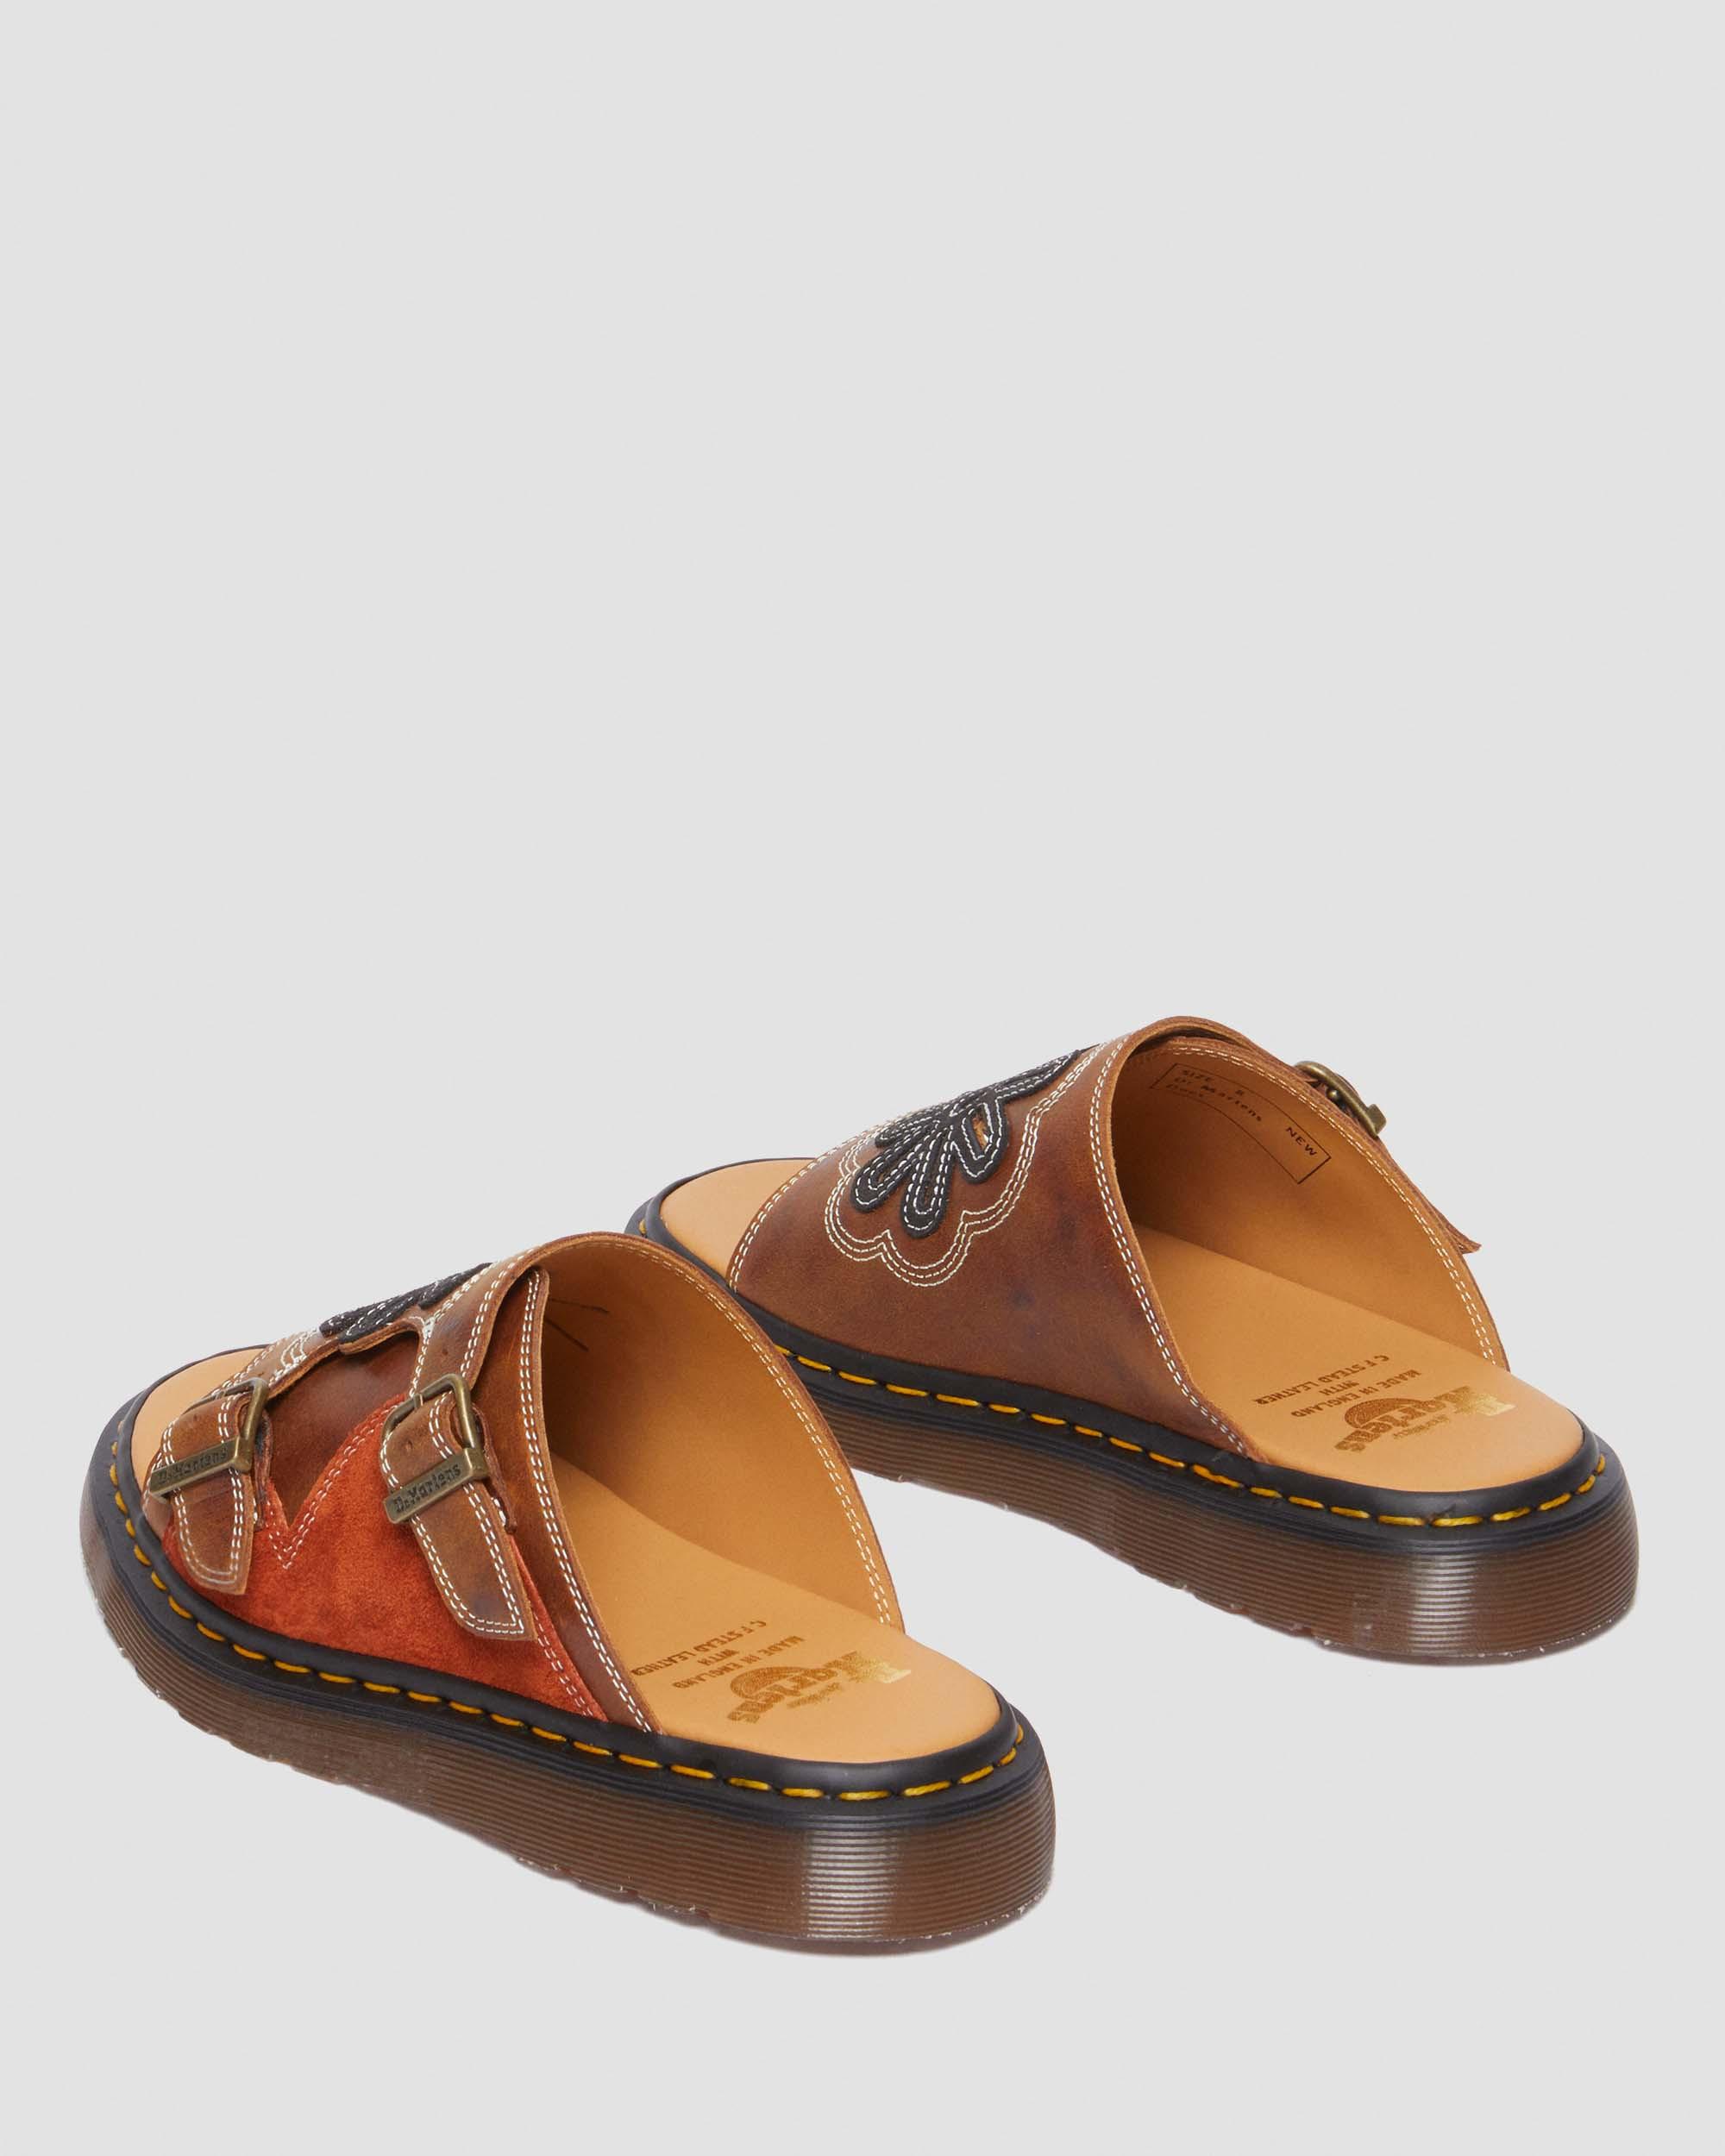 Dayne Made in England Leather & Suede Applique Slides in Conker Brown+Black+Rust Orange